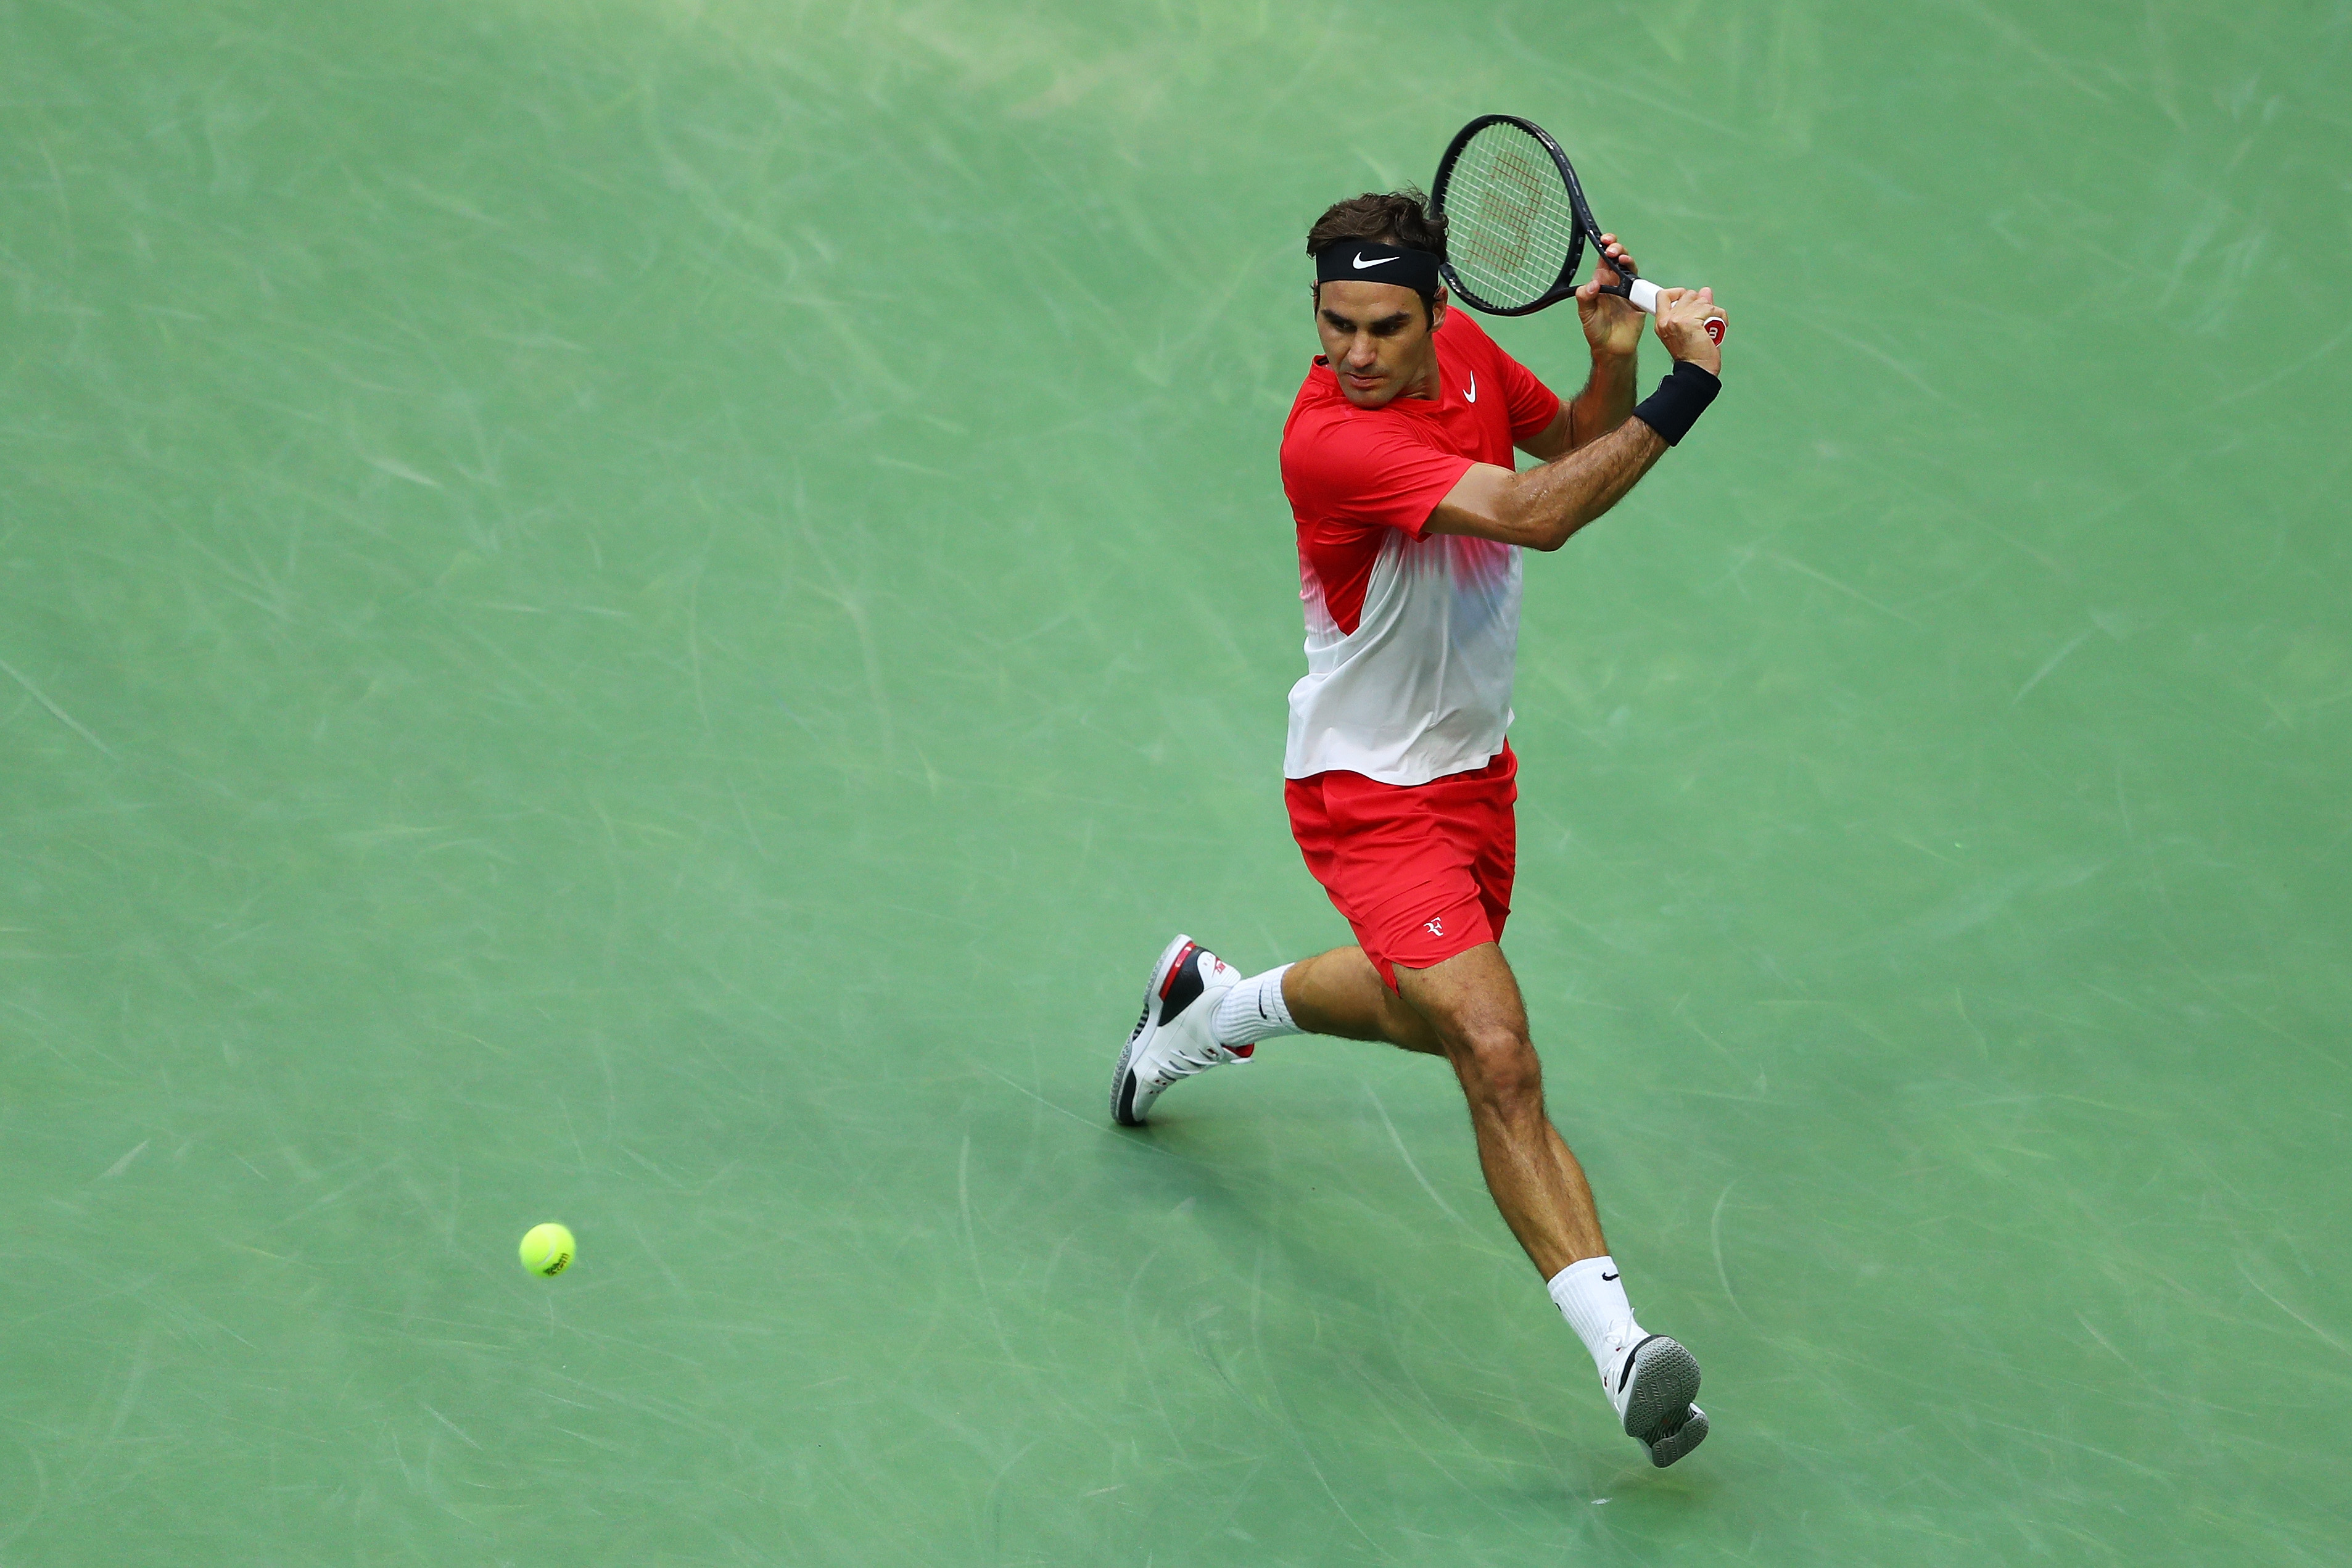 I just hope I can find my rhythm and range a bit earlier, says Roger Federer